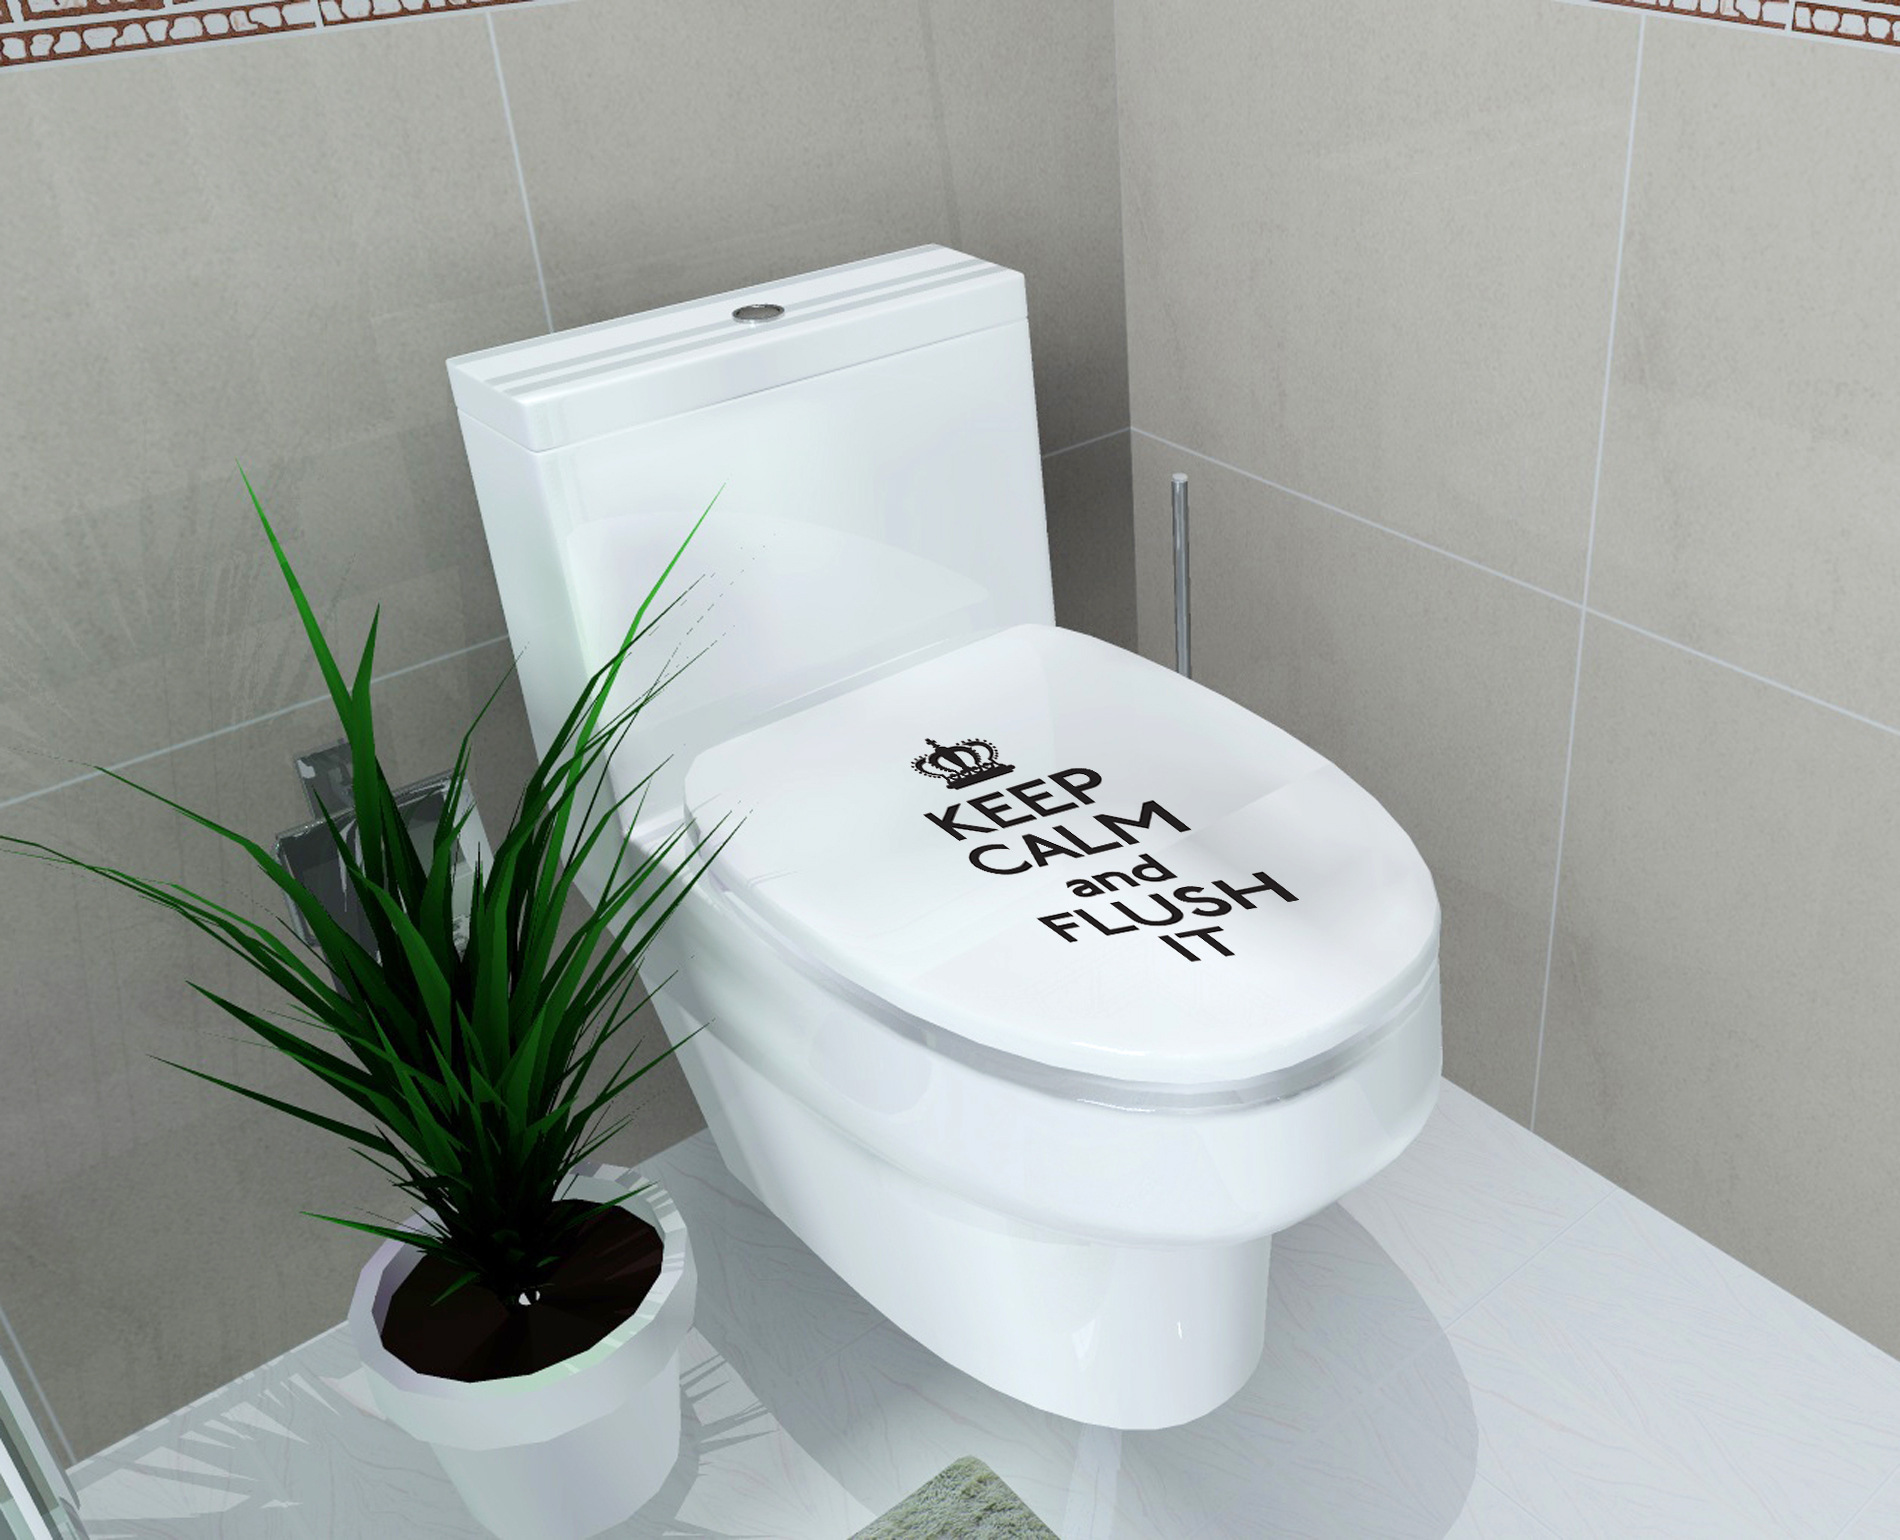 Creative-3D-Toilet-Seat-Wall-Sticker-Art-Wallpaper-Removable-Bathroom-Decals-Home-Decor-1299895-2